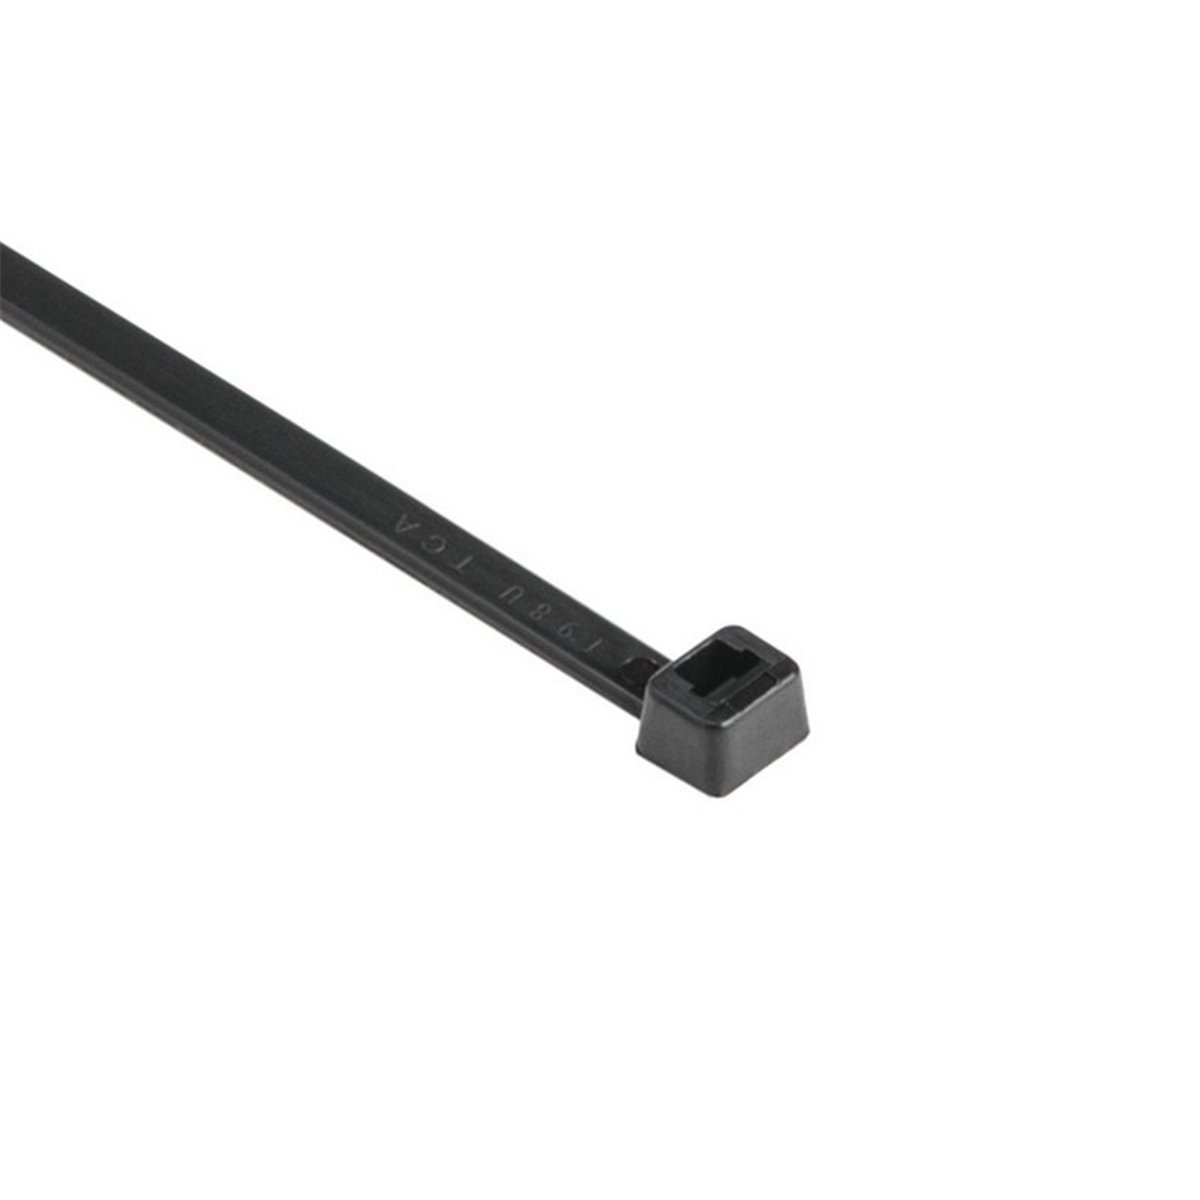 Cable tie T150XL-PA66W-BK, 8.9x1095mm, black, 25 pcs. HellermannTyton